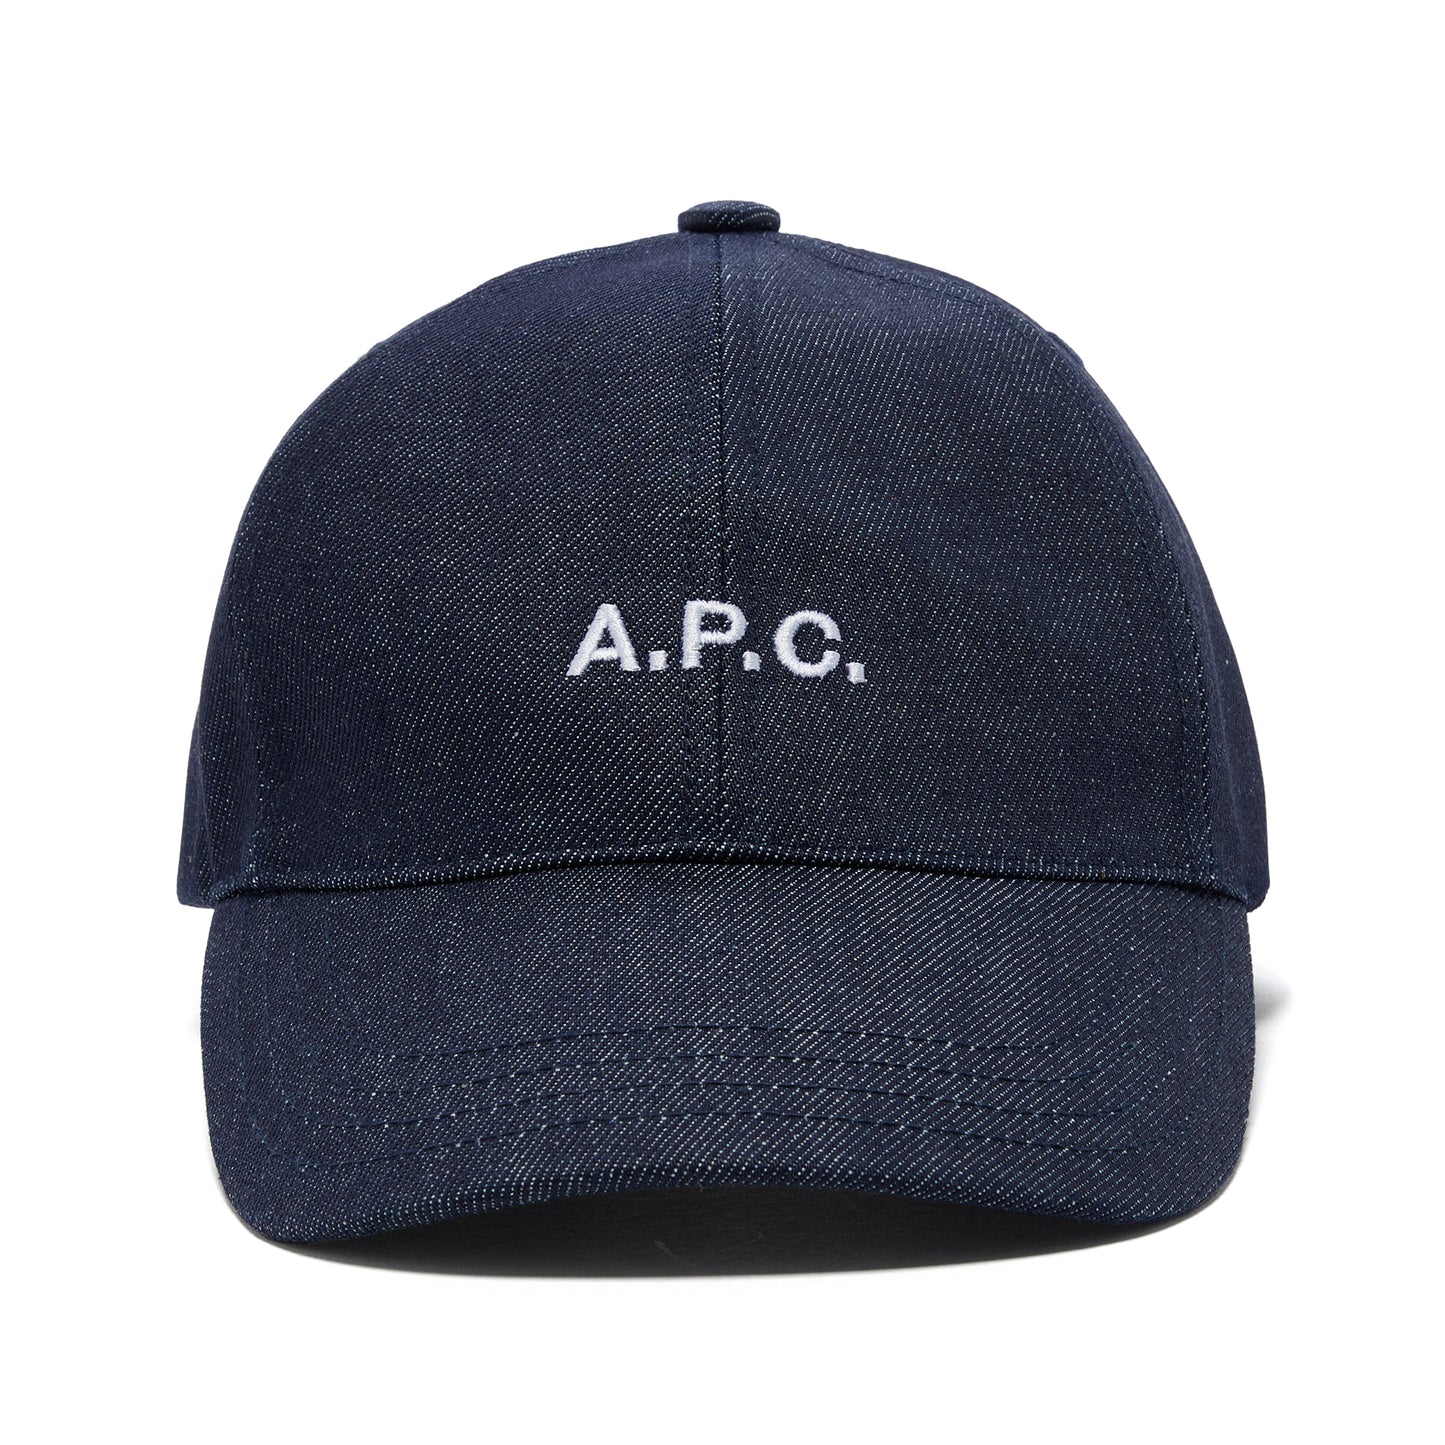 A.P.C. Casquette Charlie Hat (Indigo)